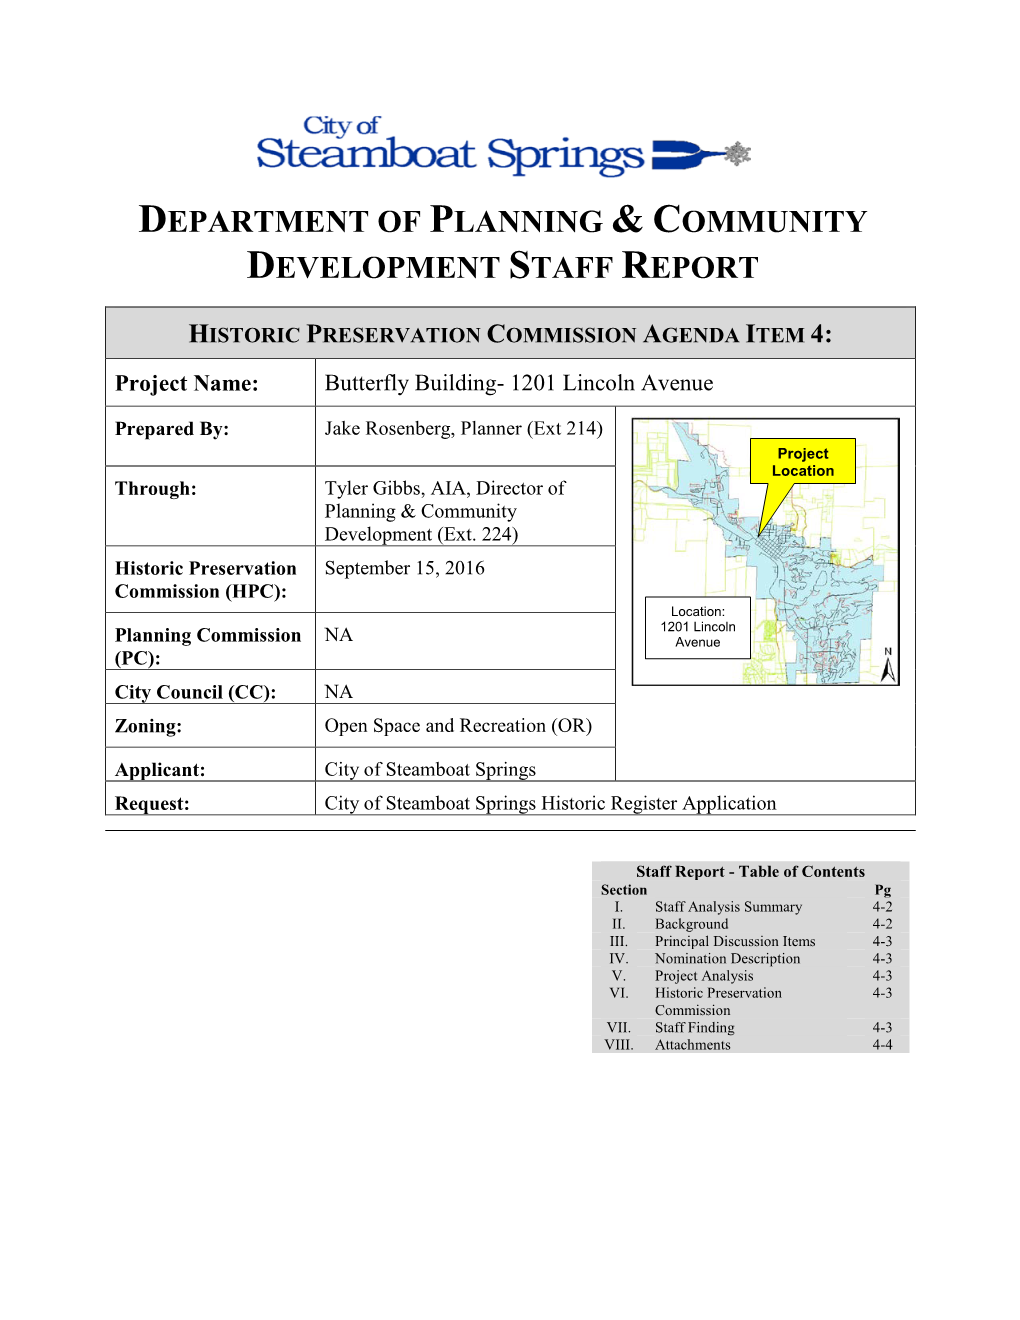 Department of Planning & Community Development